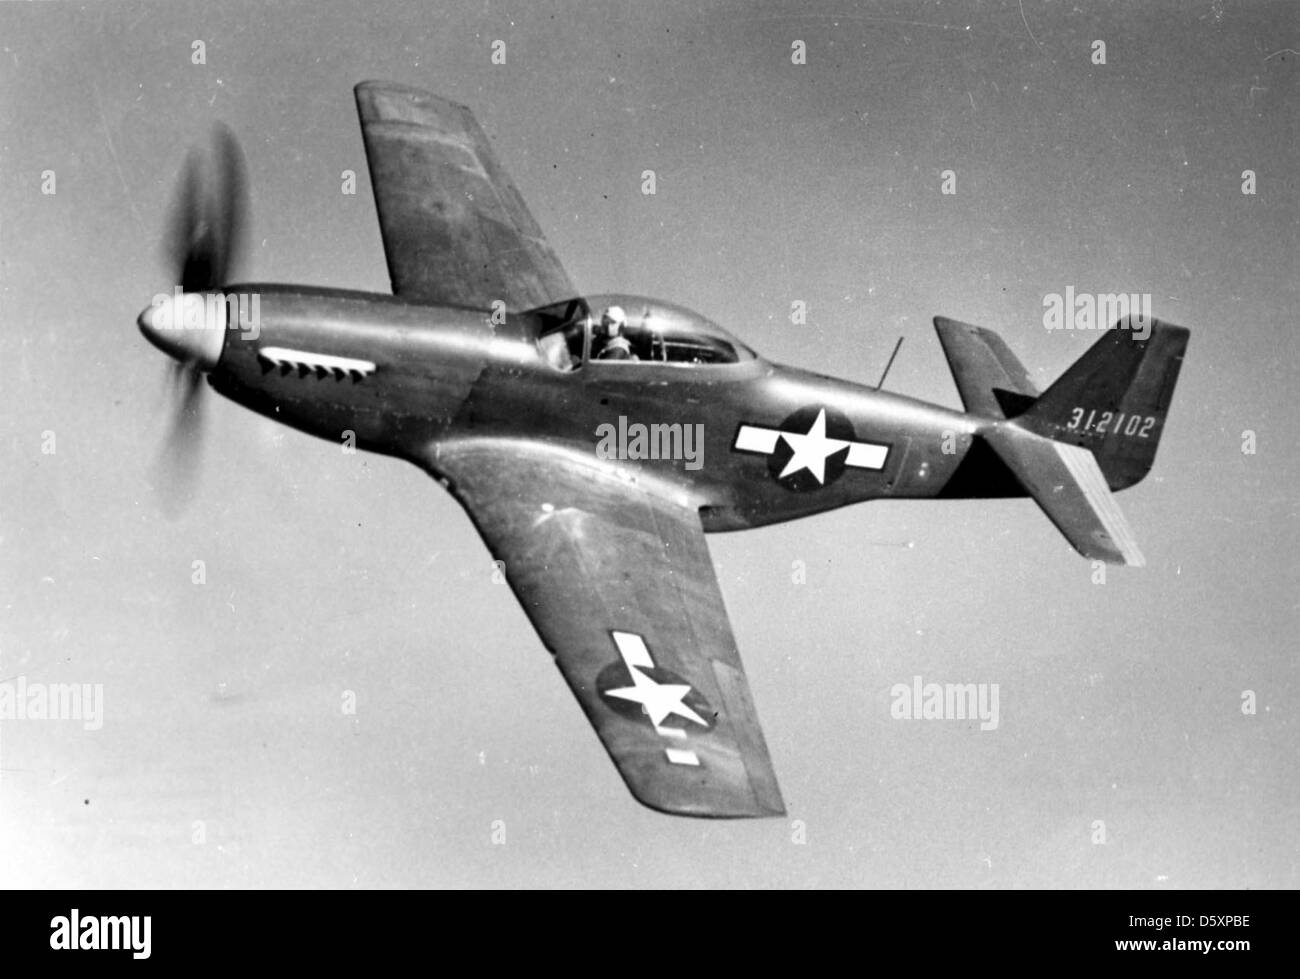 North American (P-51B-1-NA) P-51D "Mustang" prototype, fall 1944. Stock Photo